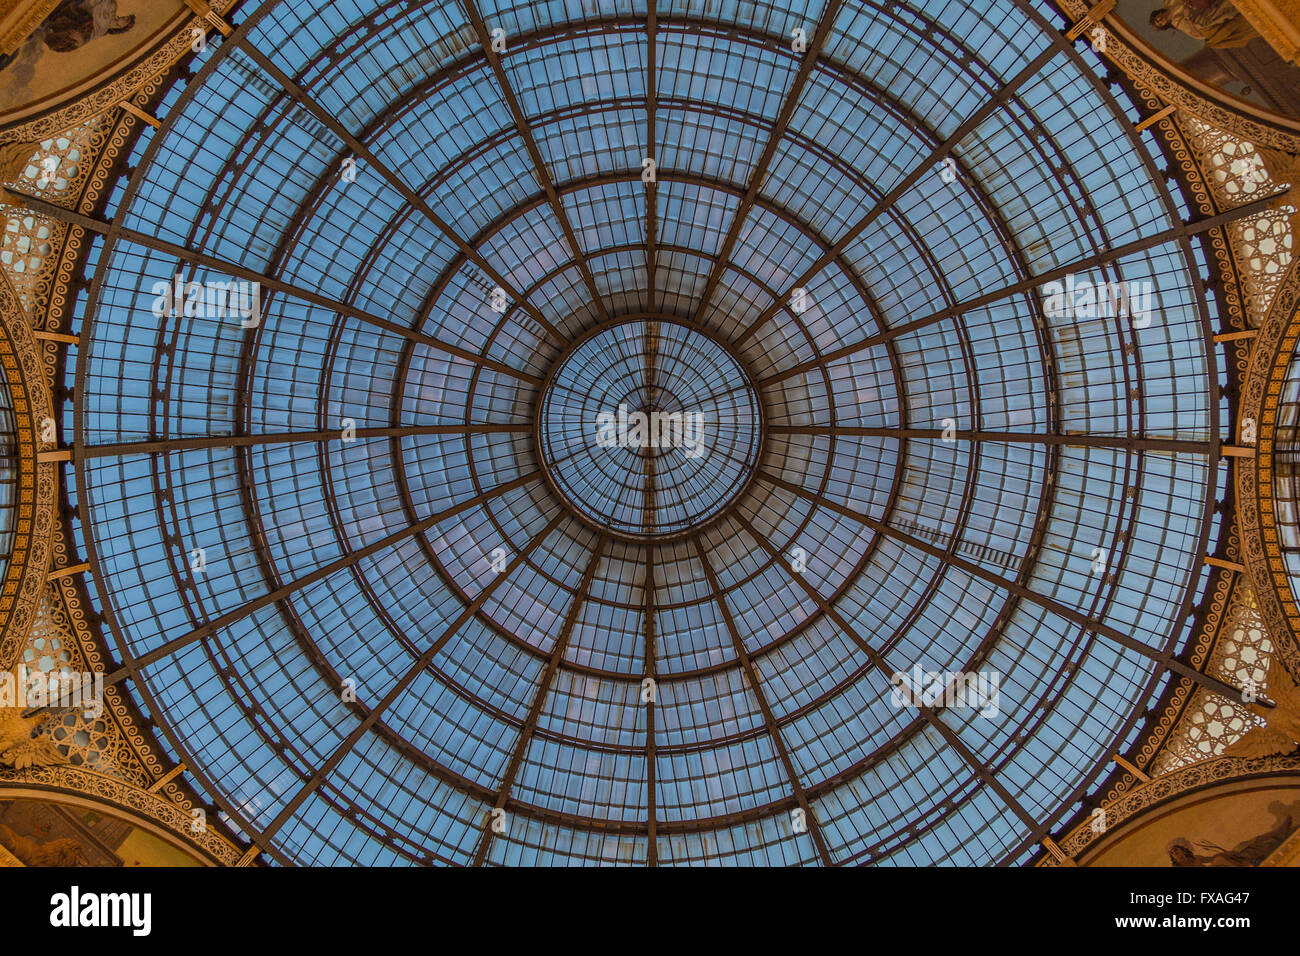 Dôme en verre sur l'octogone dans la Galleria Vittorio Emanuele II, Place de la cathédrale, la Piazza del Duomo, Milan, Italie Banque D'Images